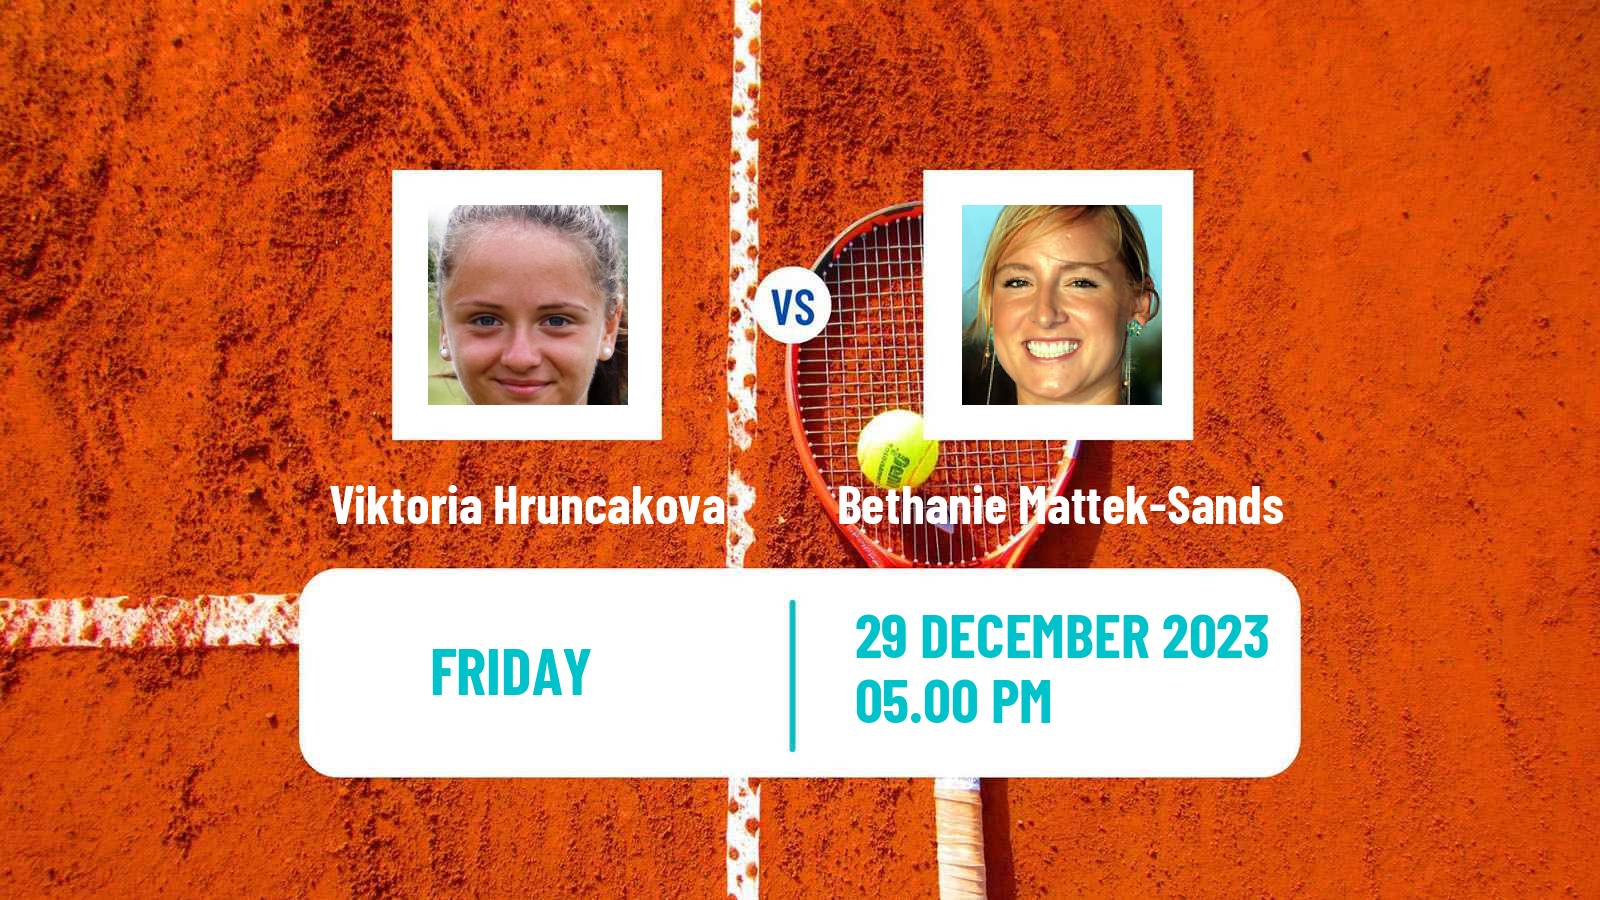 Tennis WTA Auckland Viktoria Hruncakova - Bethanie Mattek-Sands